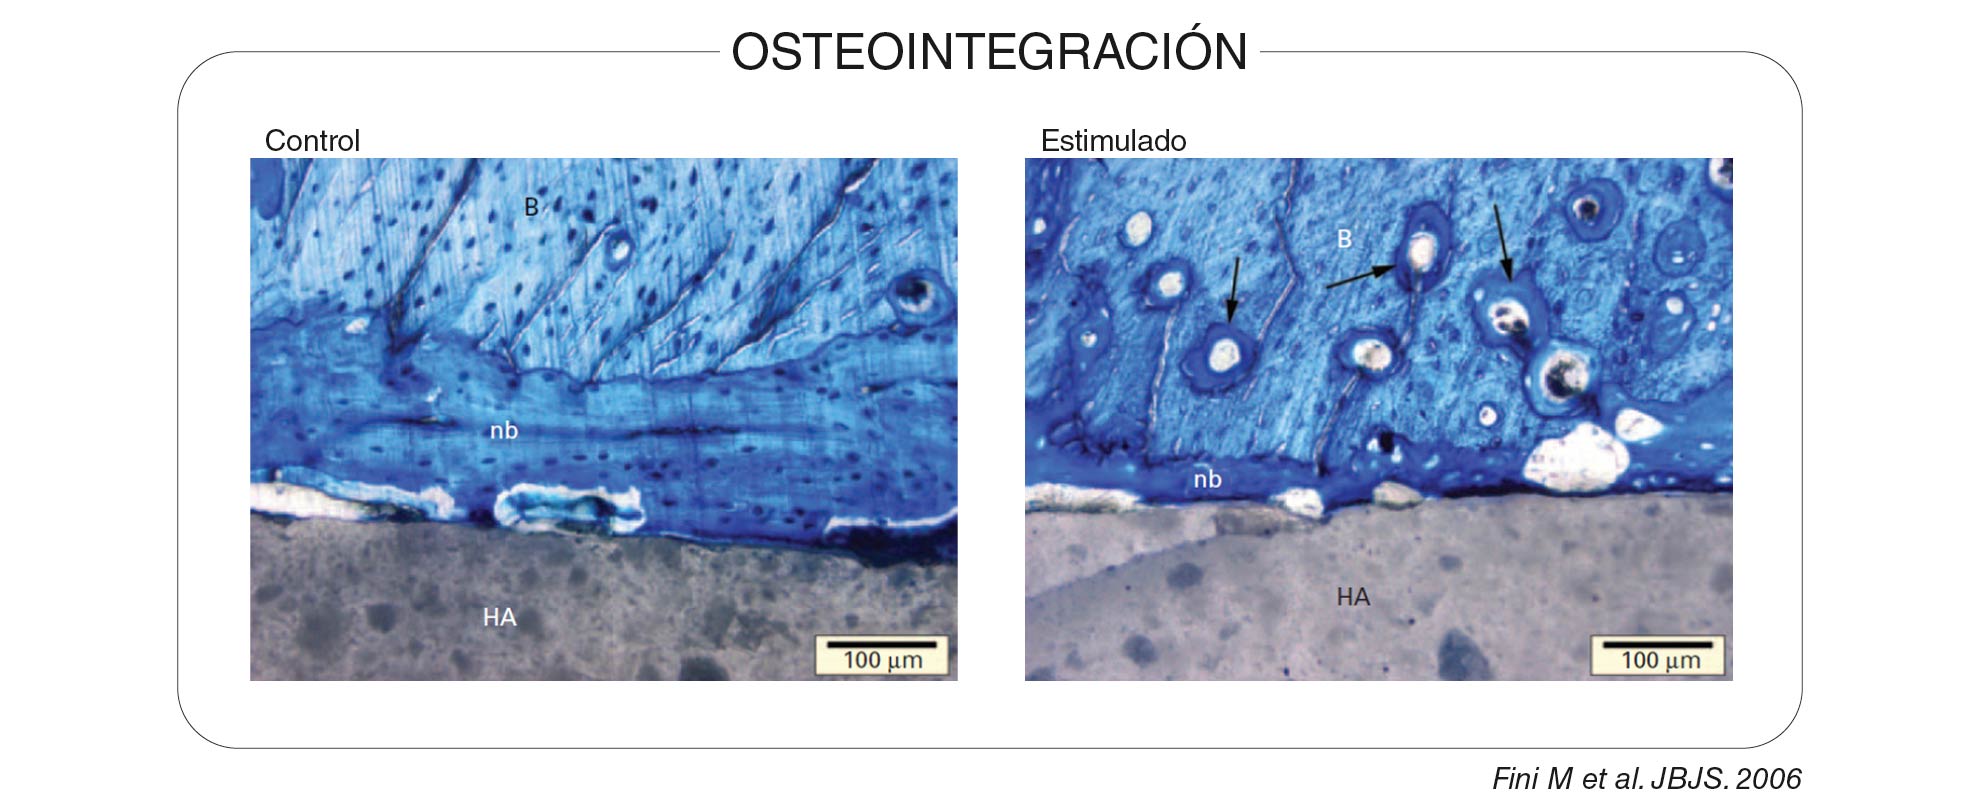 Osteointegracion